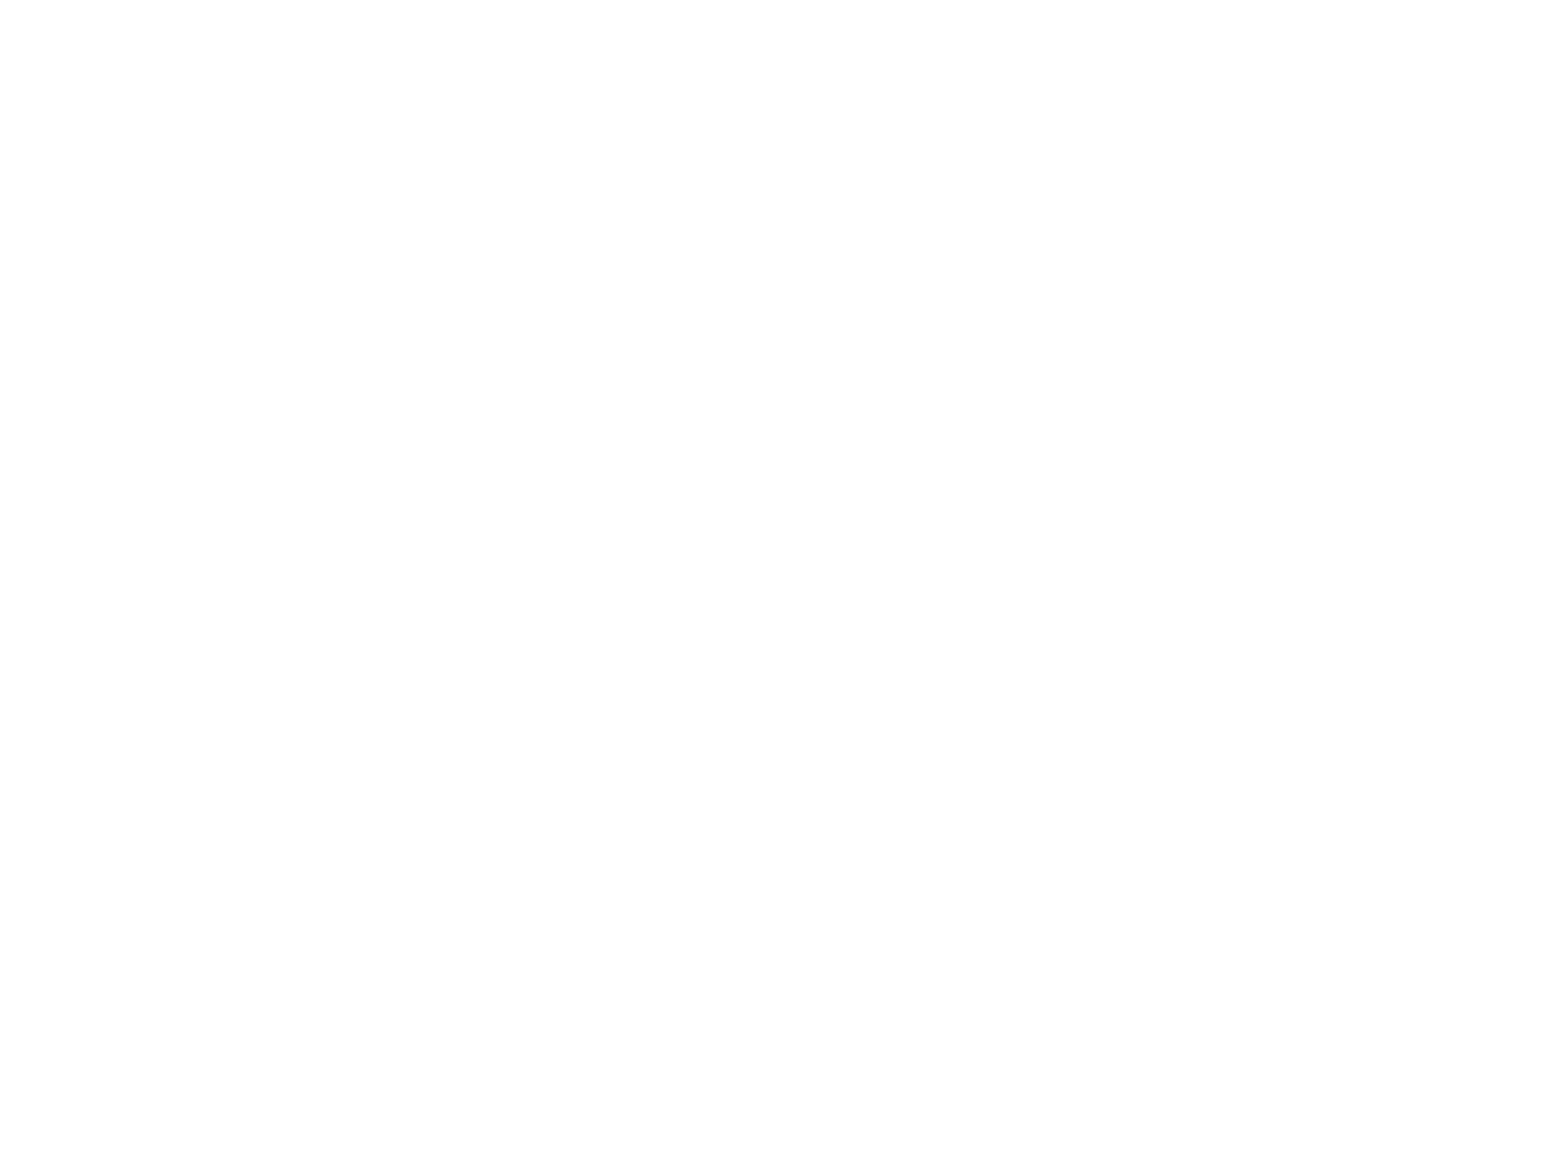 Masraf Al Rayan logo for dark backgrounds (transparent PNG)